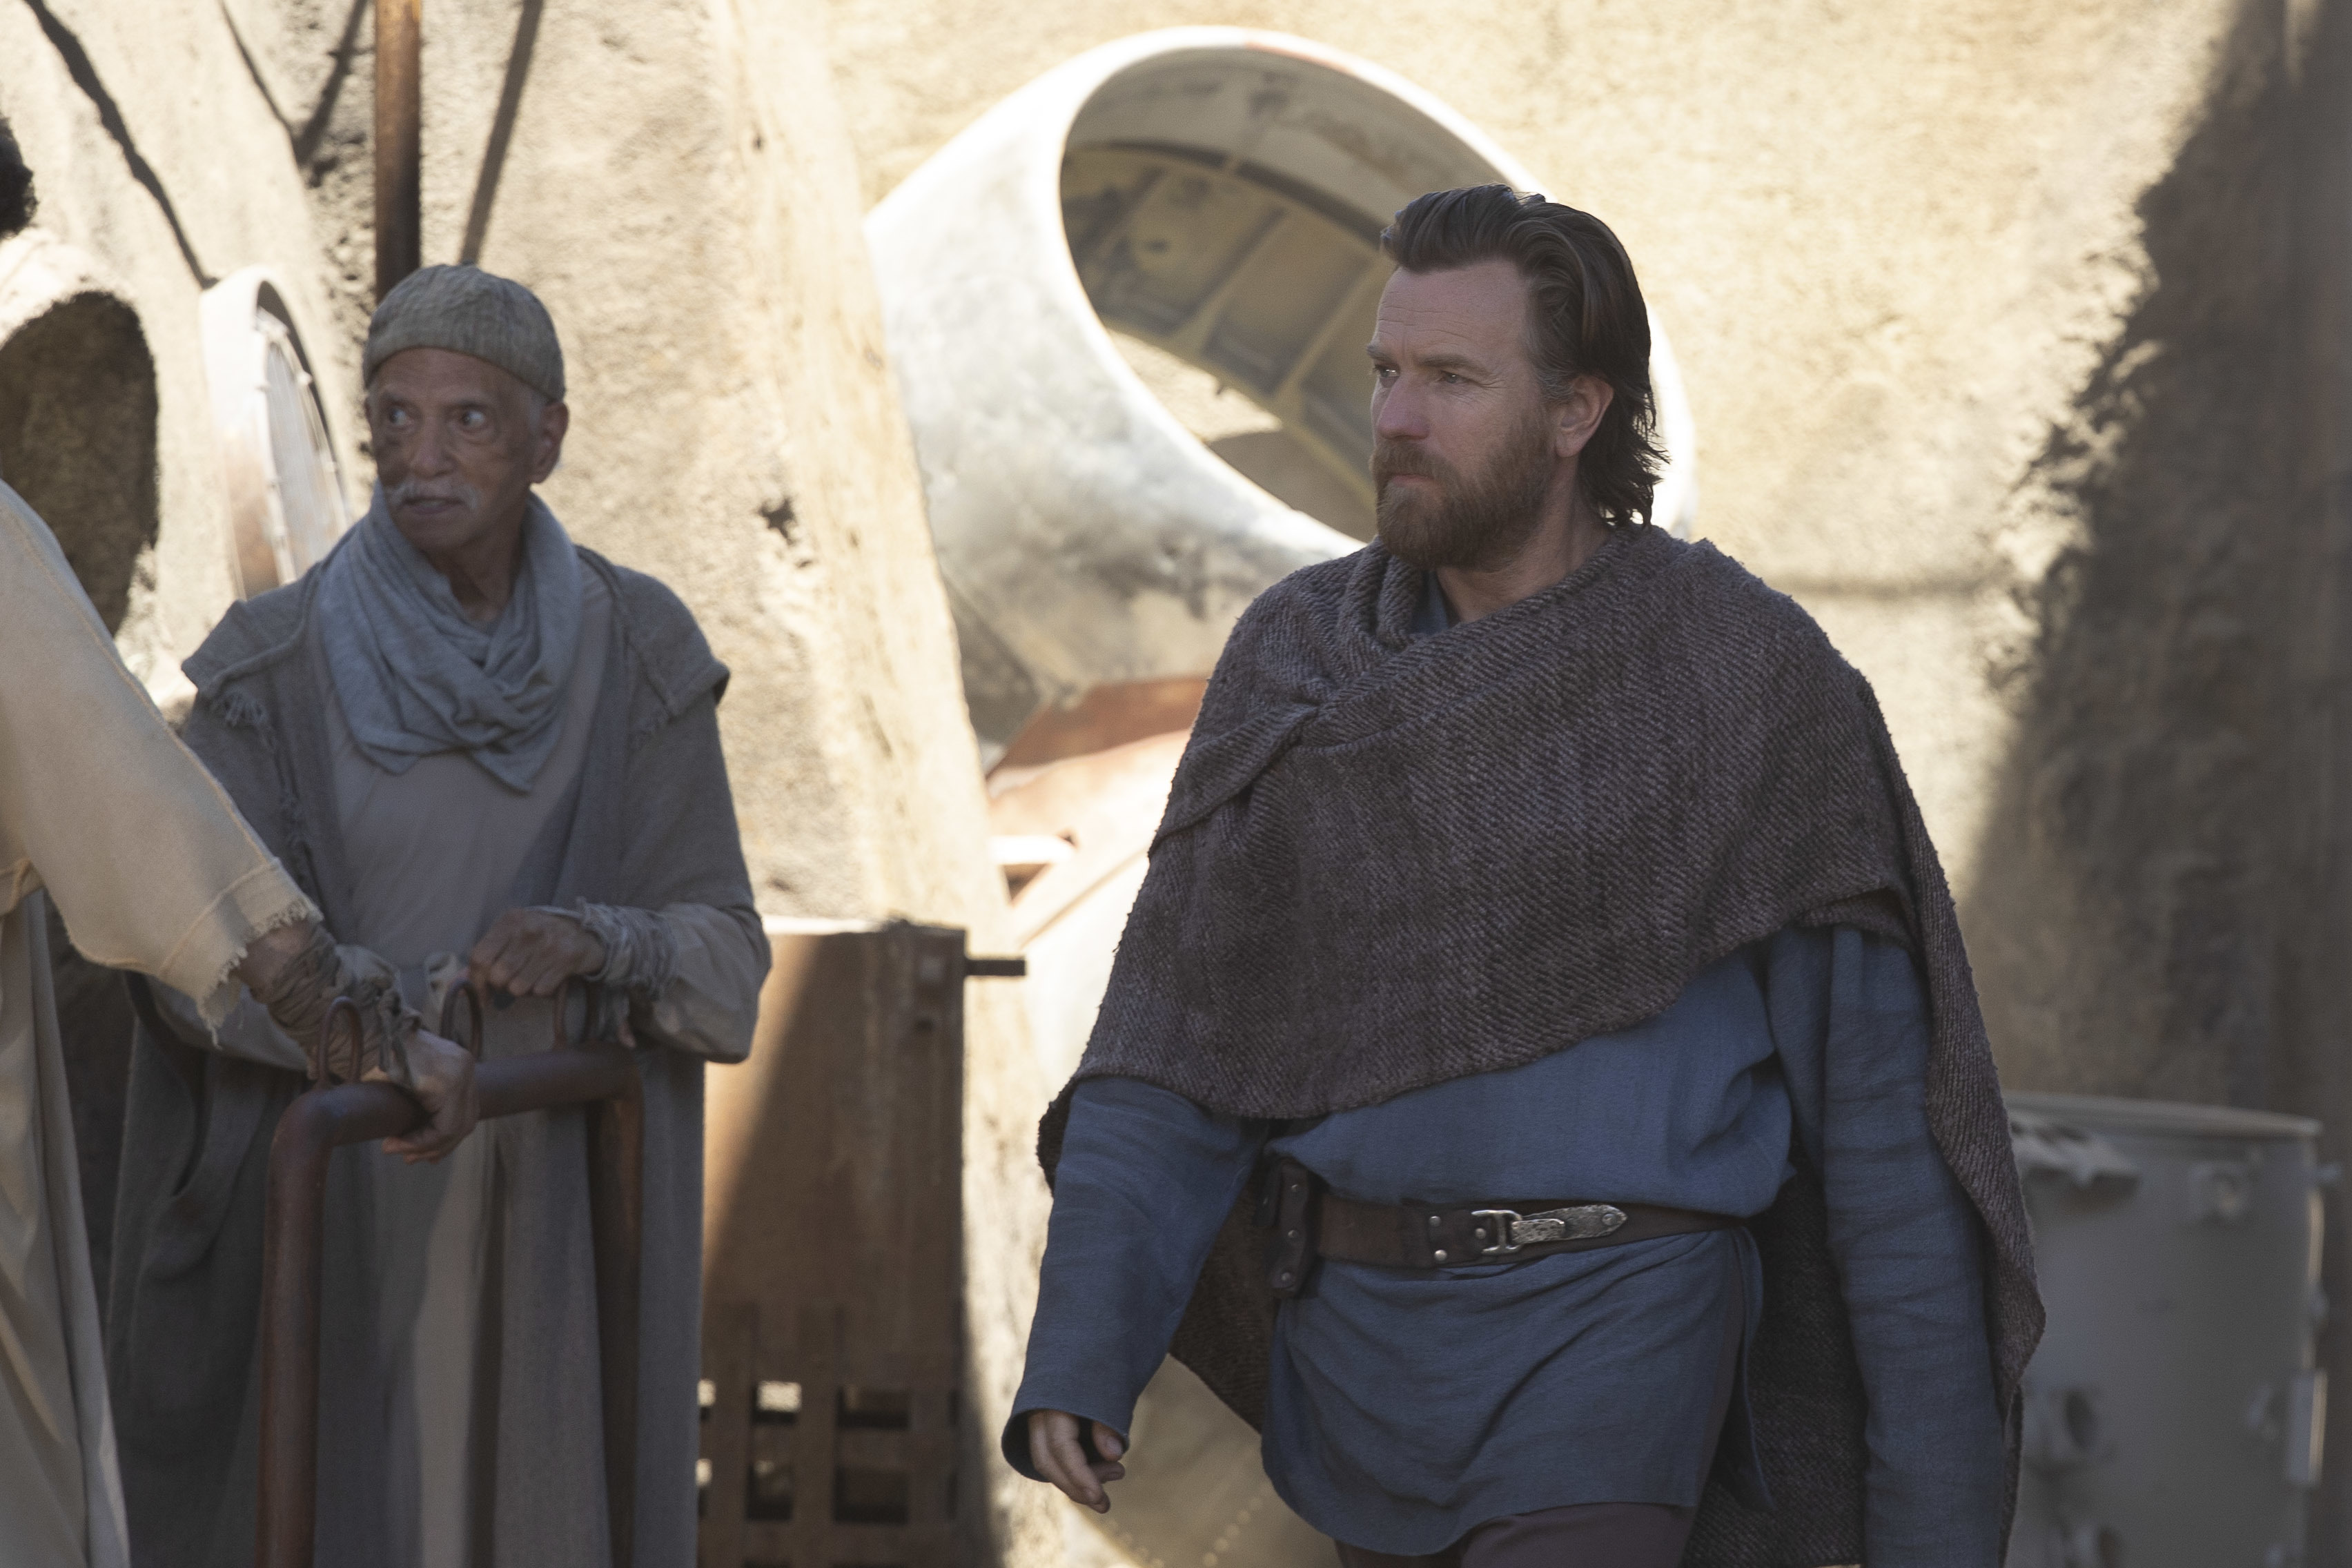 Ewan McGregor plays Obi-Wan Kenobi in the first season of the Disney+ series